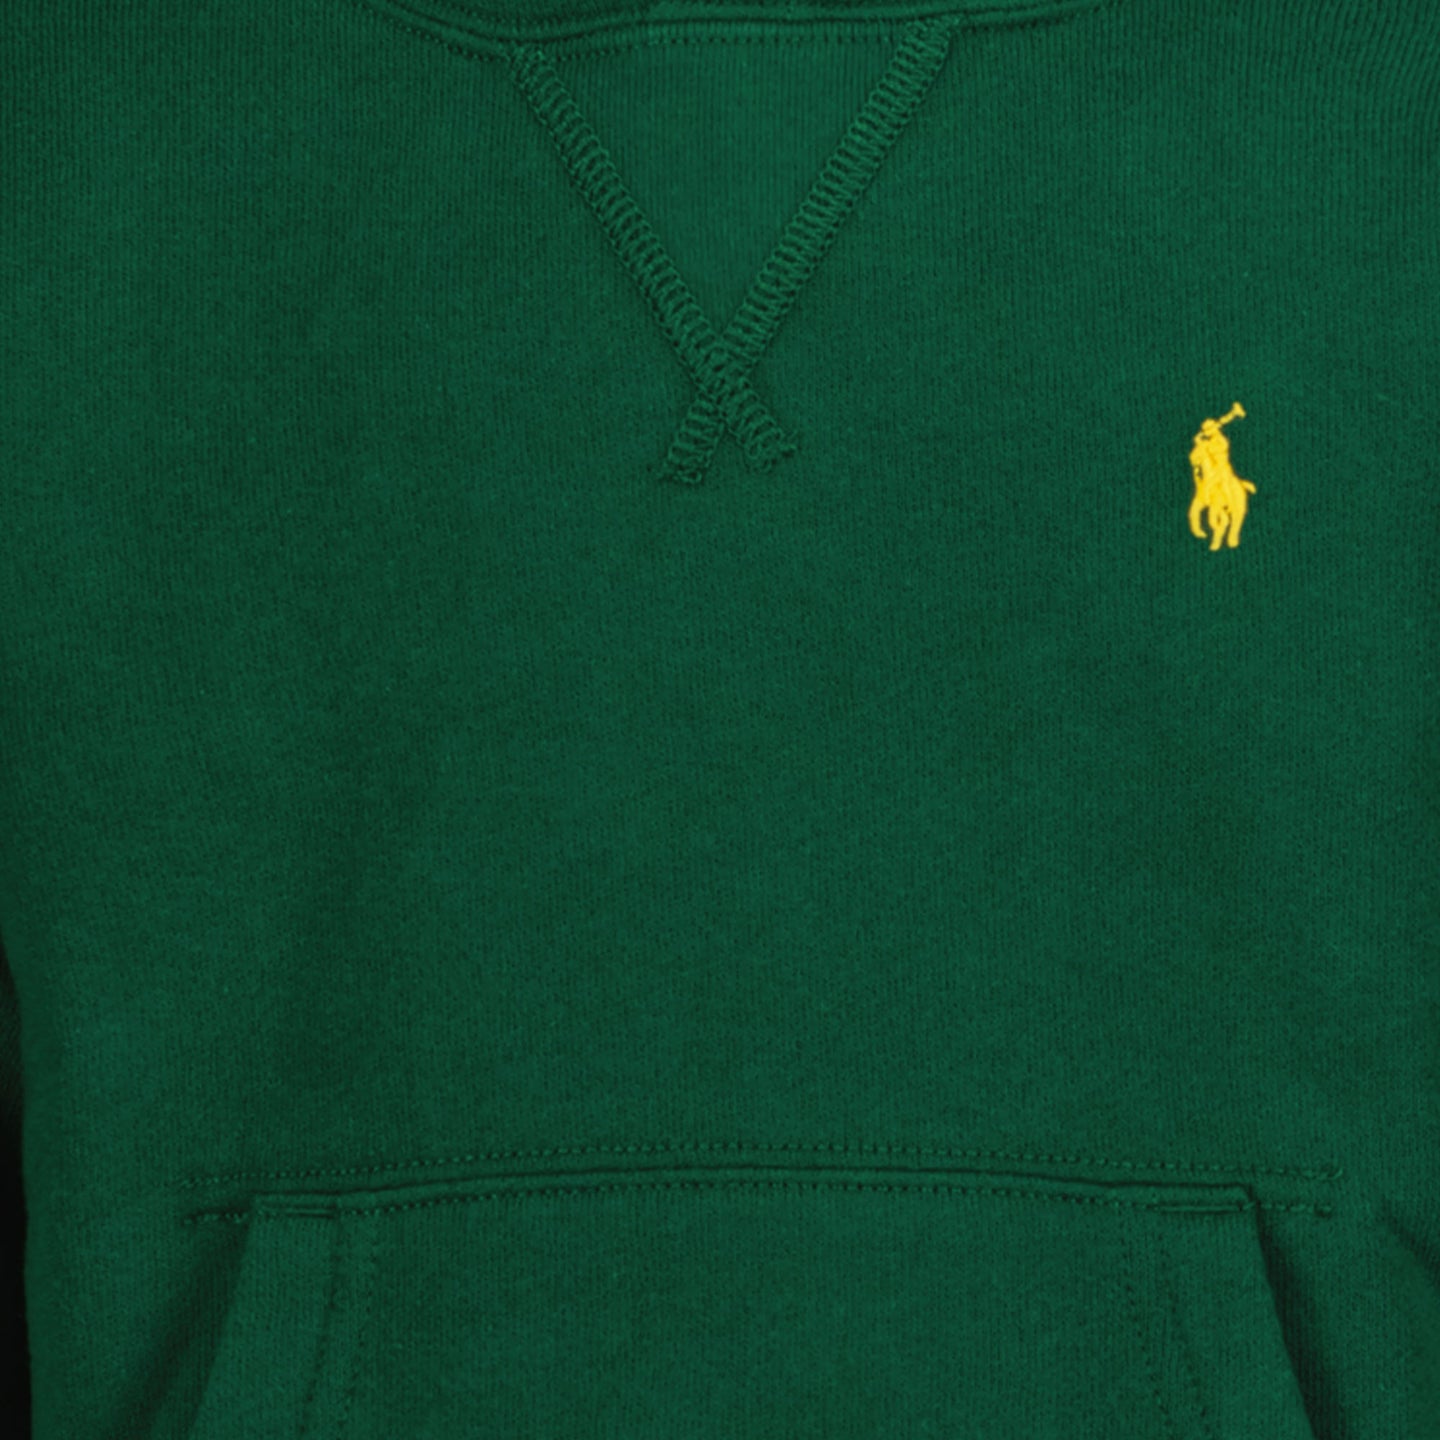 Ralph Lauren Chlapci svetr zelená